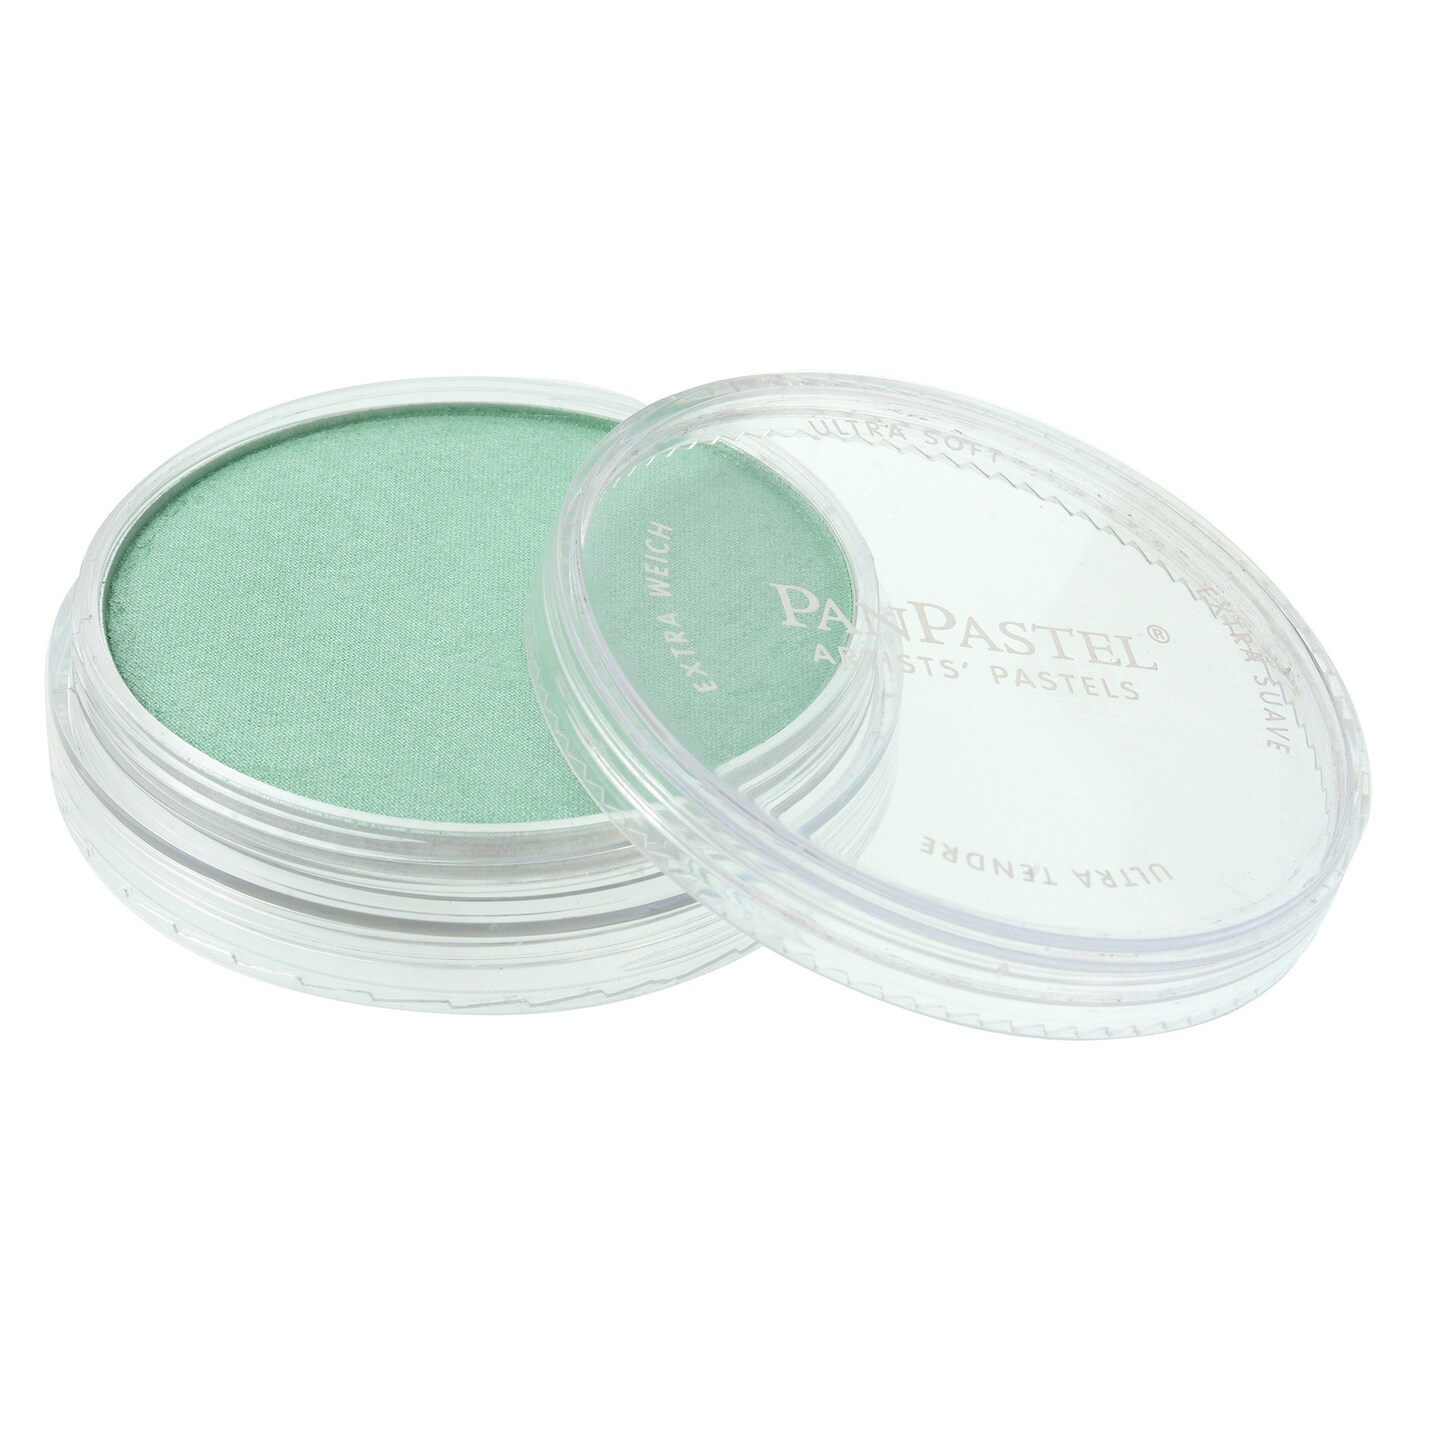 Panpastel Ultra Soft Artist Pastel Permanent Green Shade